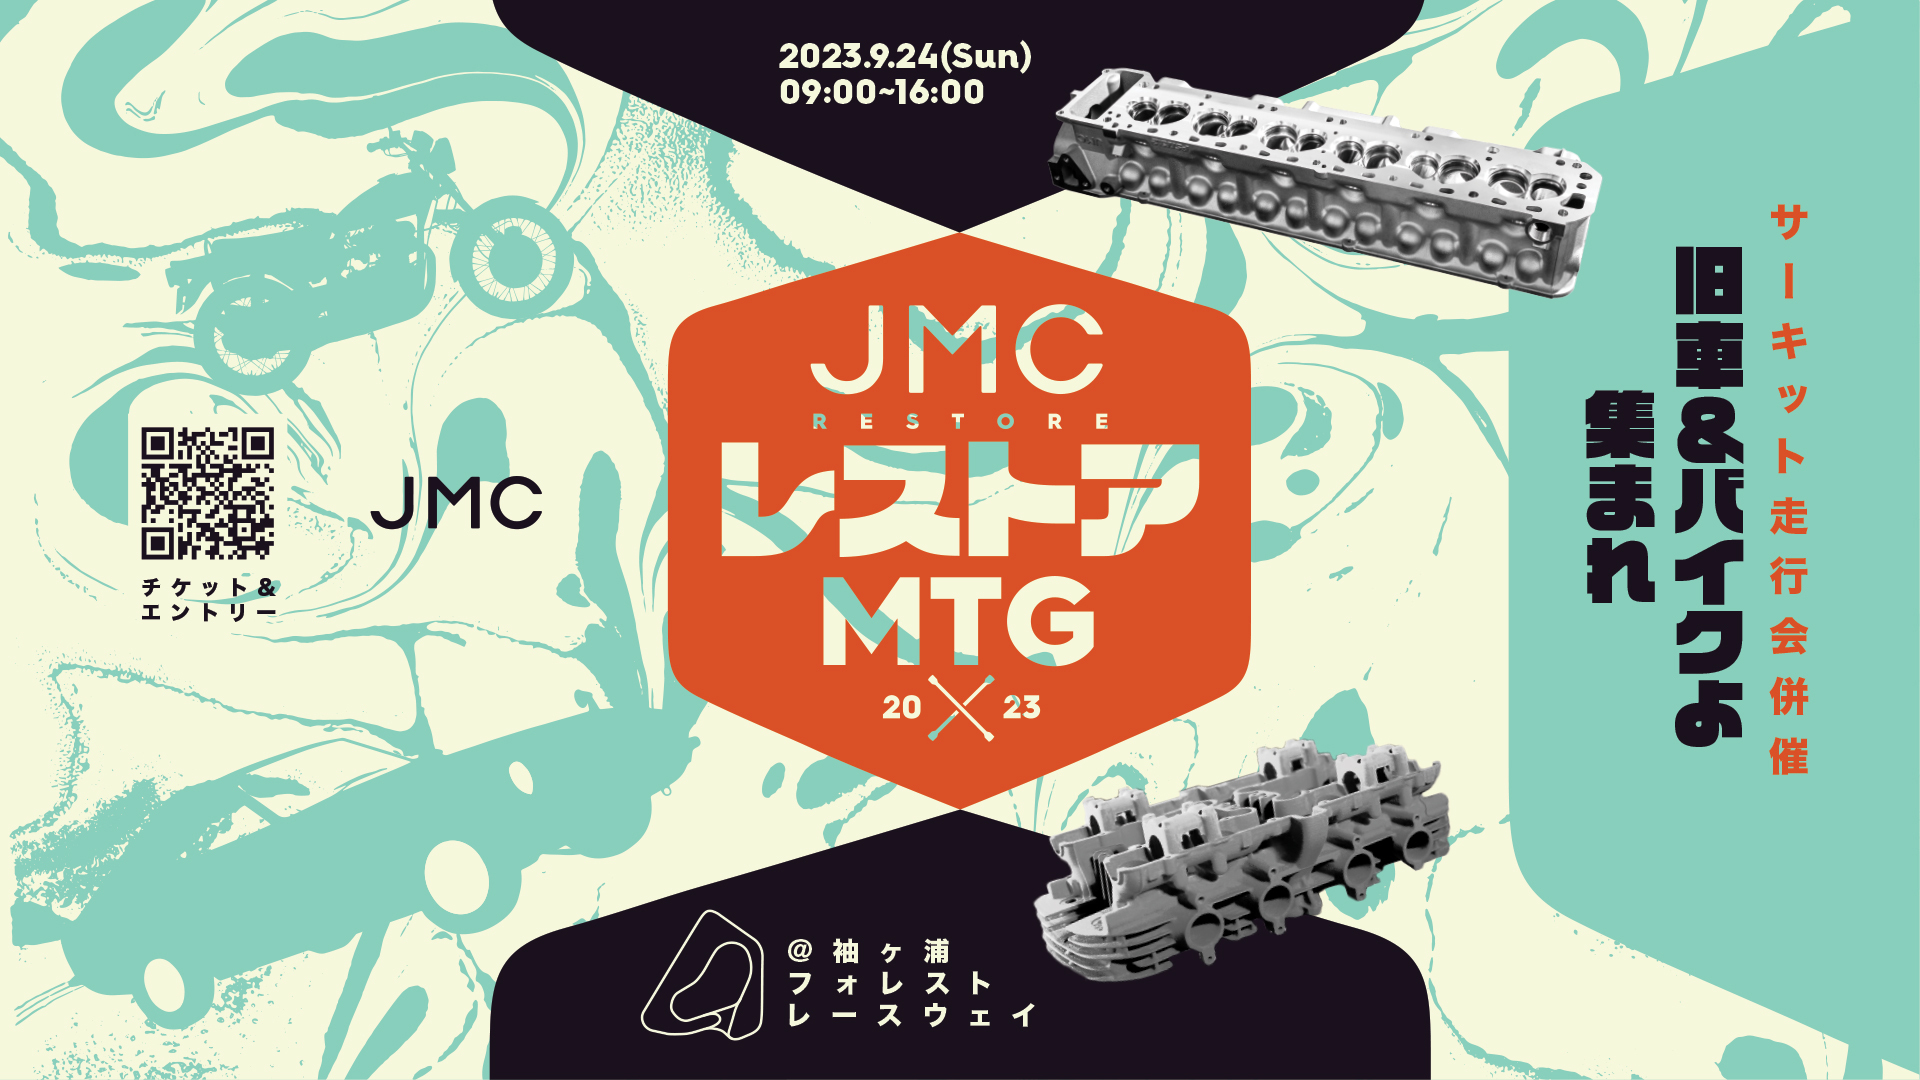 JMCレストアMTG 2023